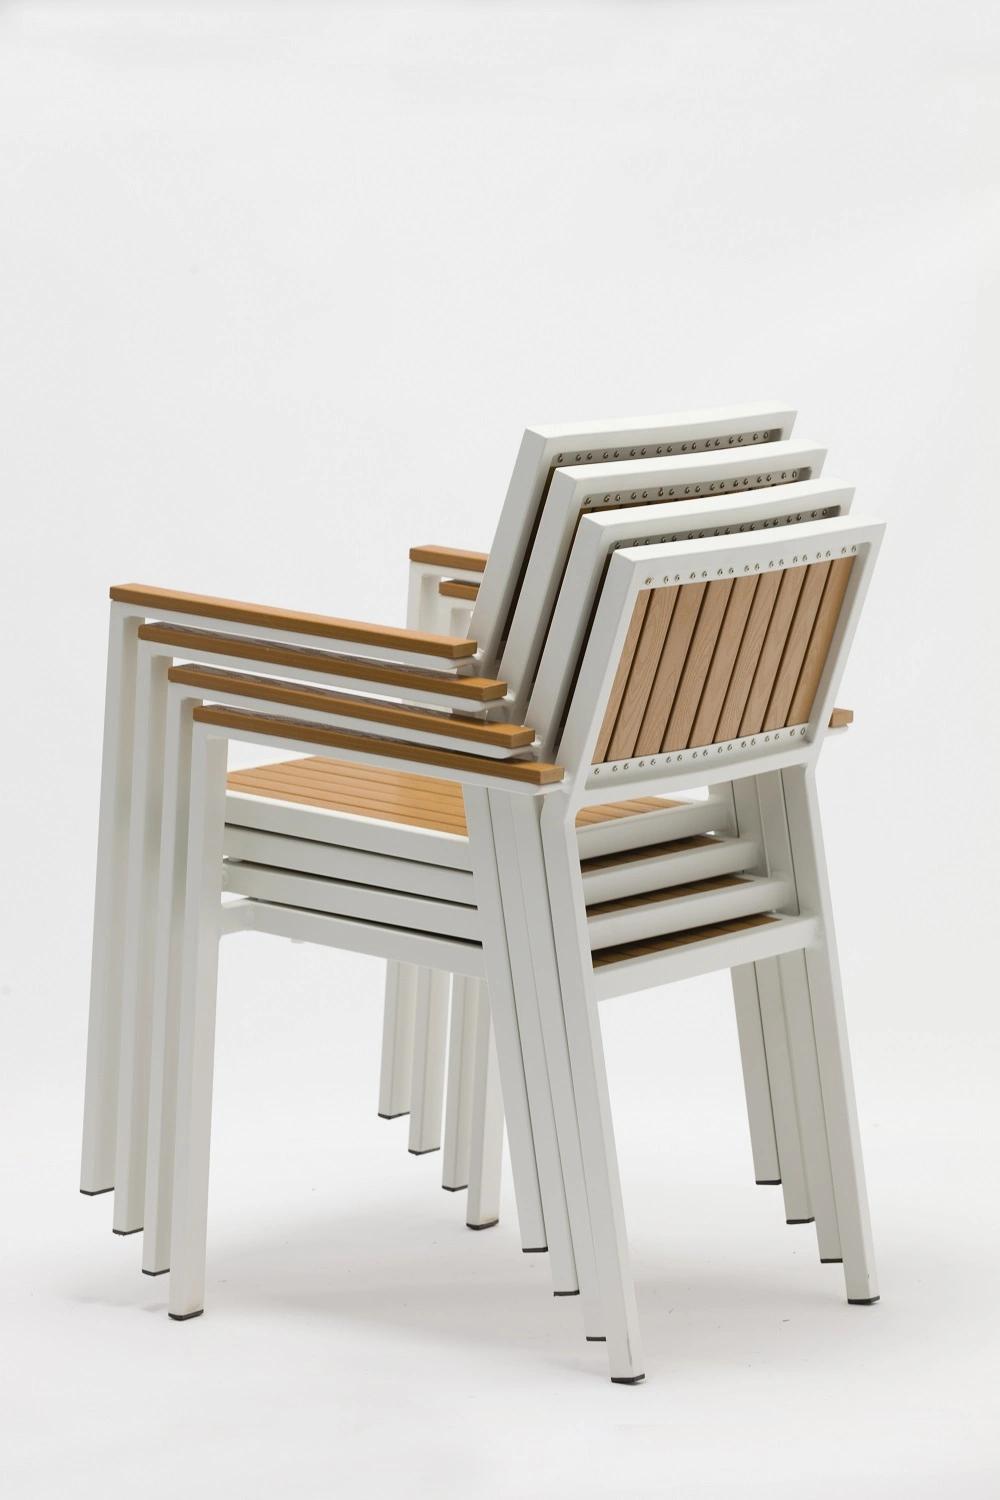 Plastic Chair Garden Furniture Outdoor Use